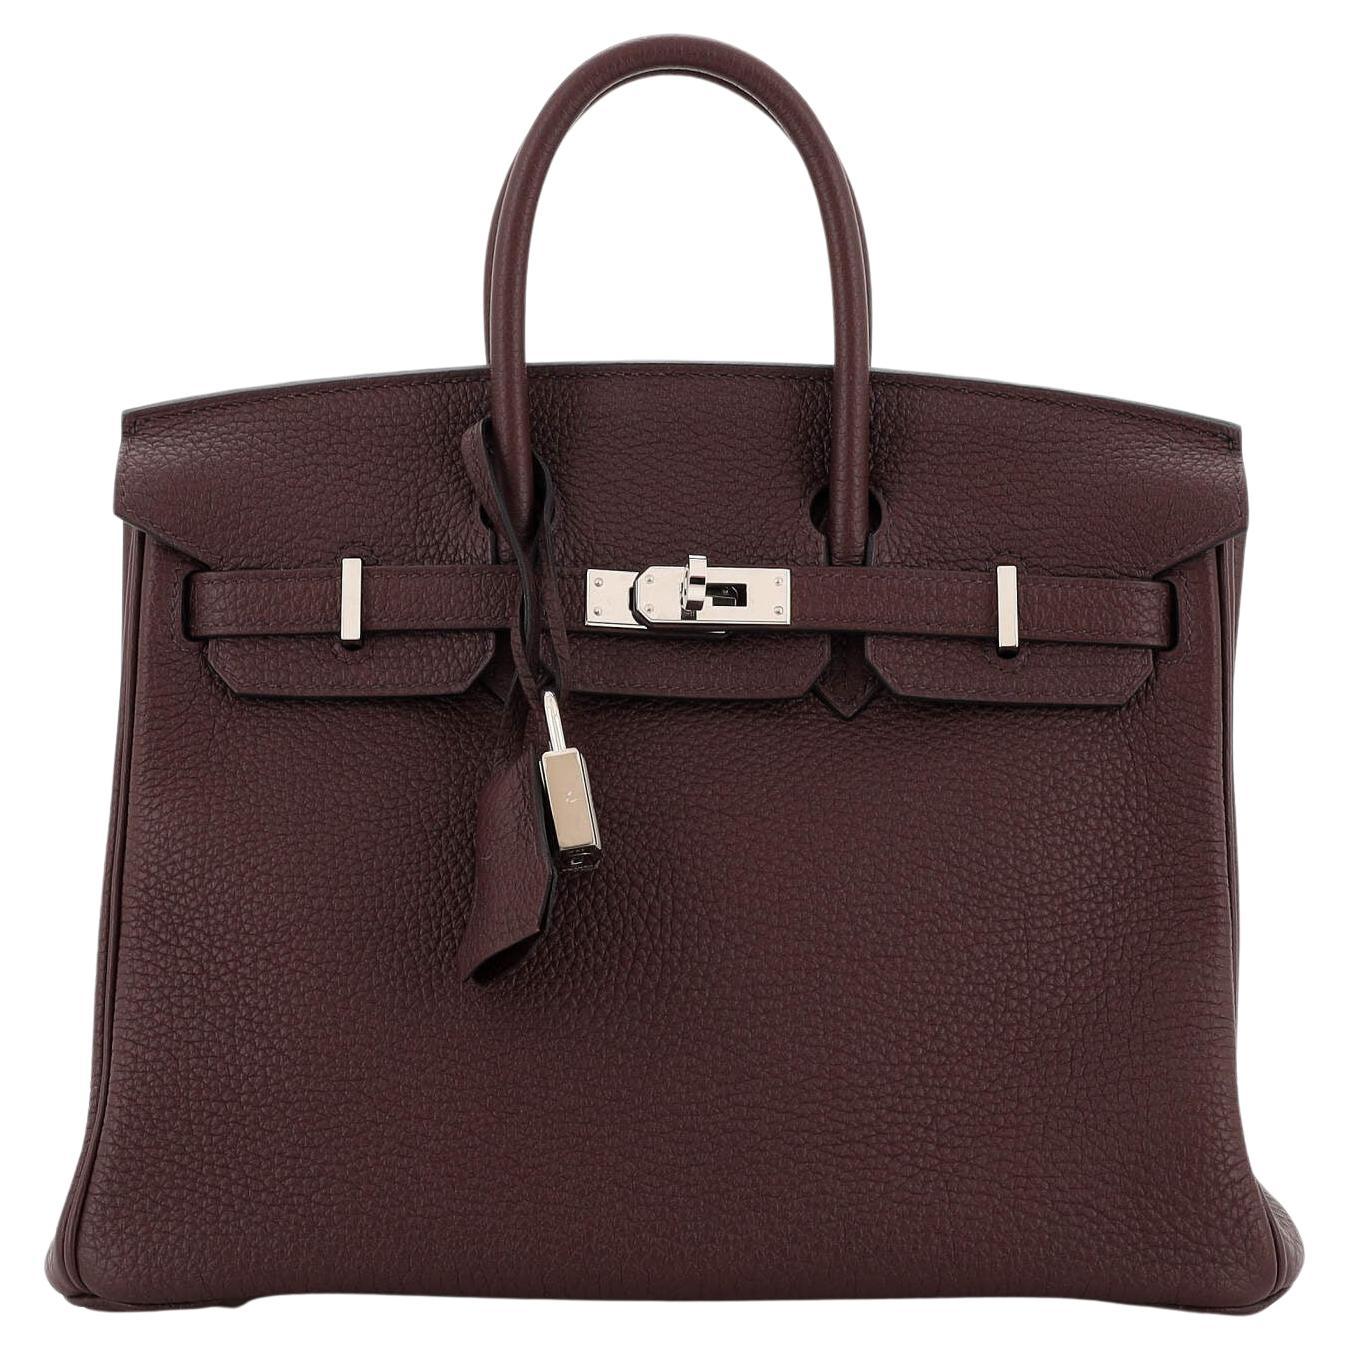 Hermes Birkin Handbag Rouge Sellier Togo with Palladium Hardware 25